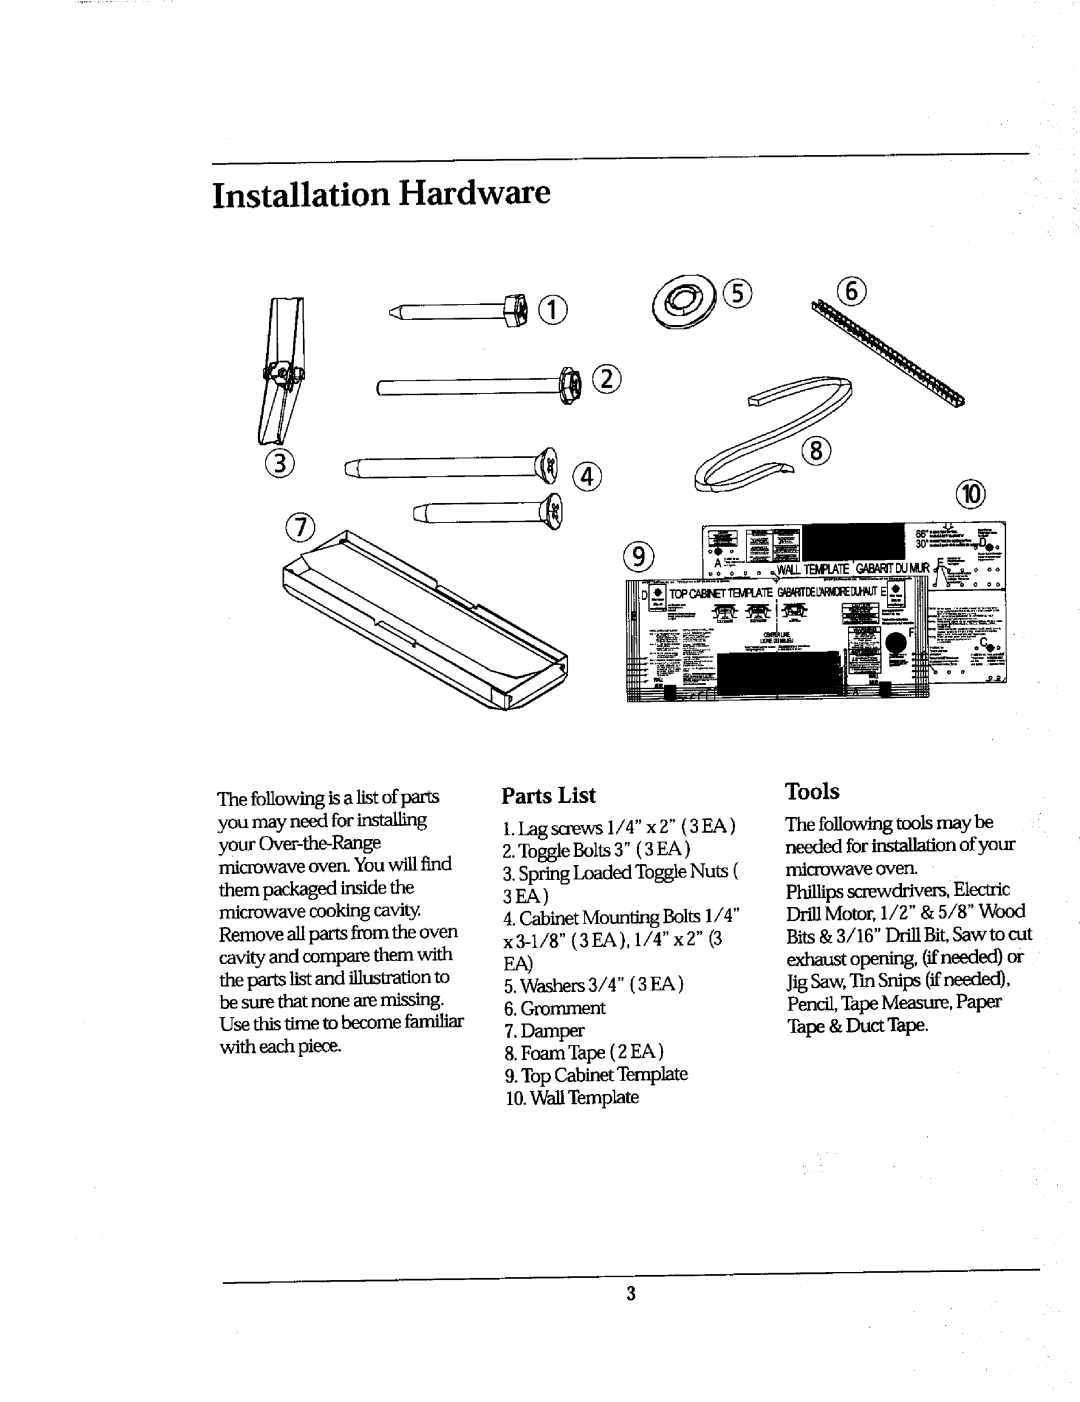 Whirlpool Ni-l30 manual Installation Hardware, Parts List 